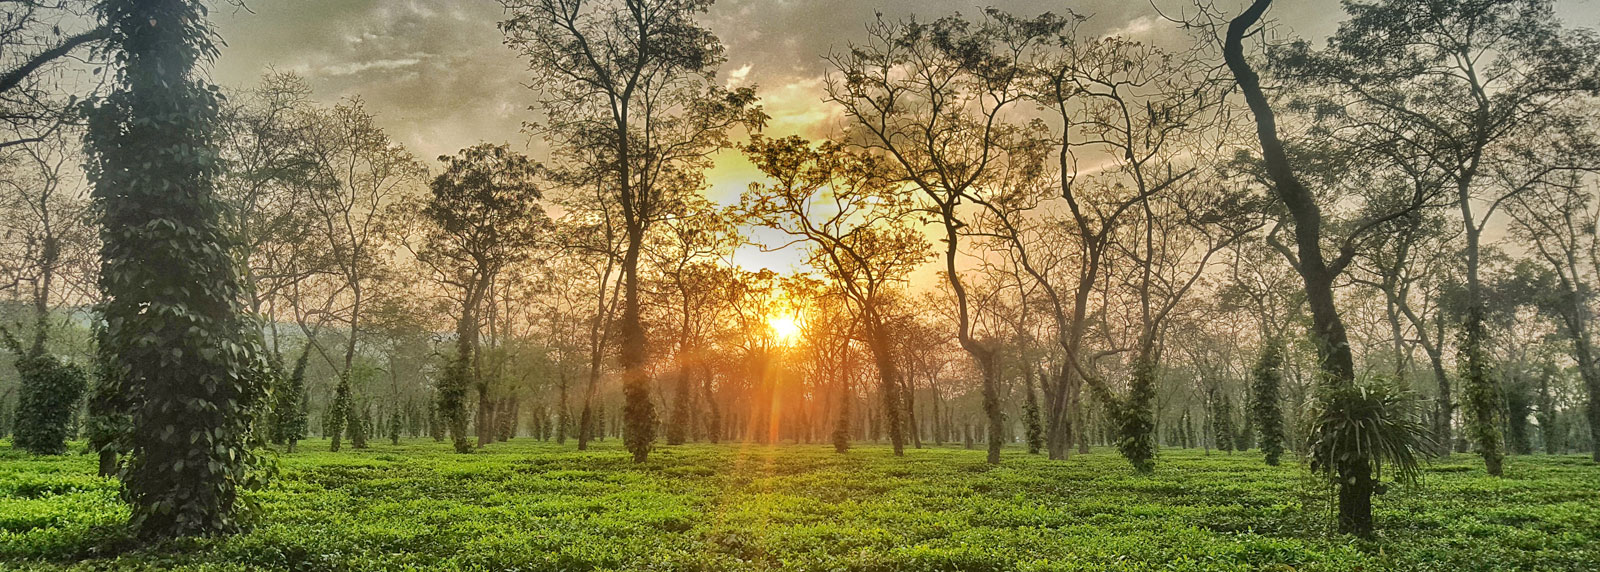 Tea plantations in Assam - India